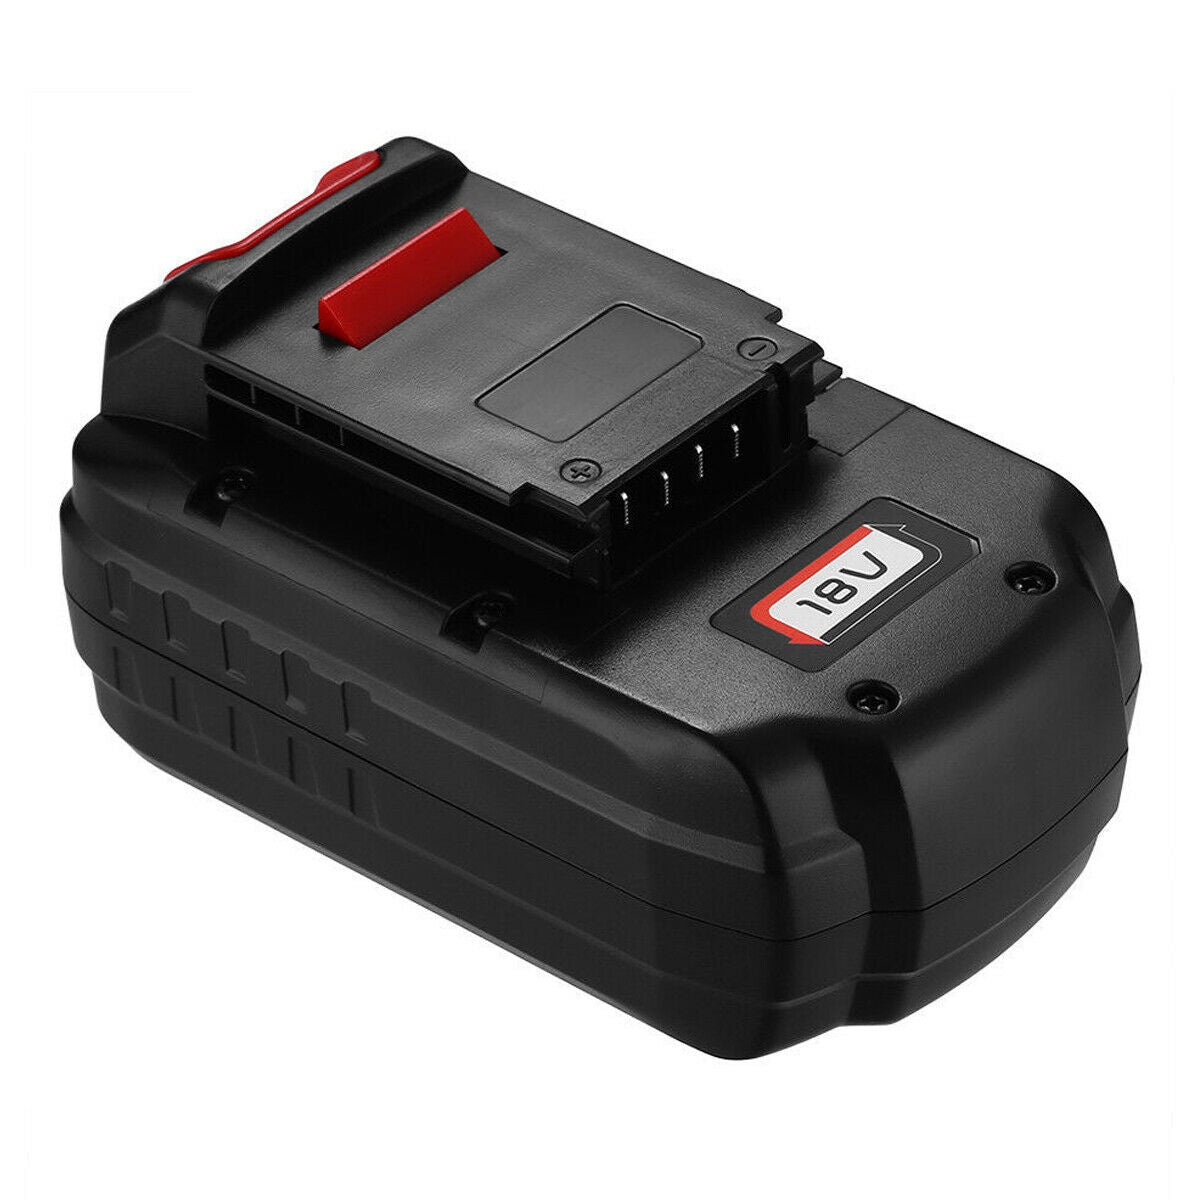 PC18B 18-Volt NI-MH Cordless Replace Battery Pack for Porter Cable 3.0Ah  PC18B PCC489N PCMVC PCXMVC Cordless Tools (1 pack)